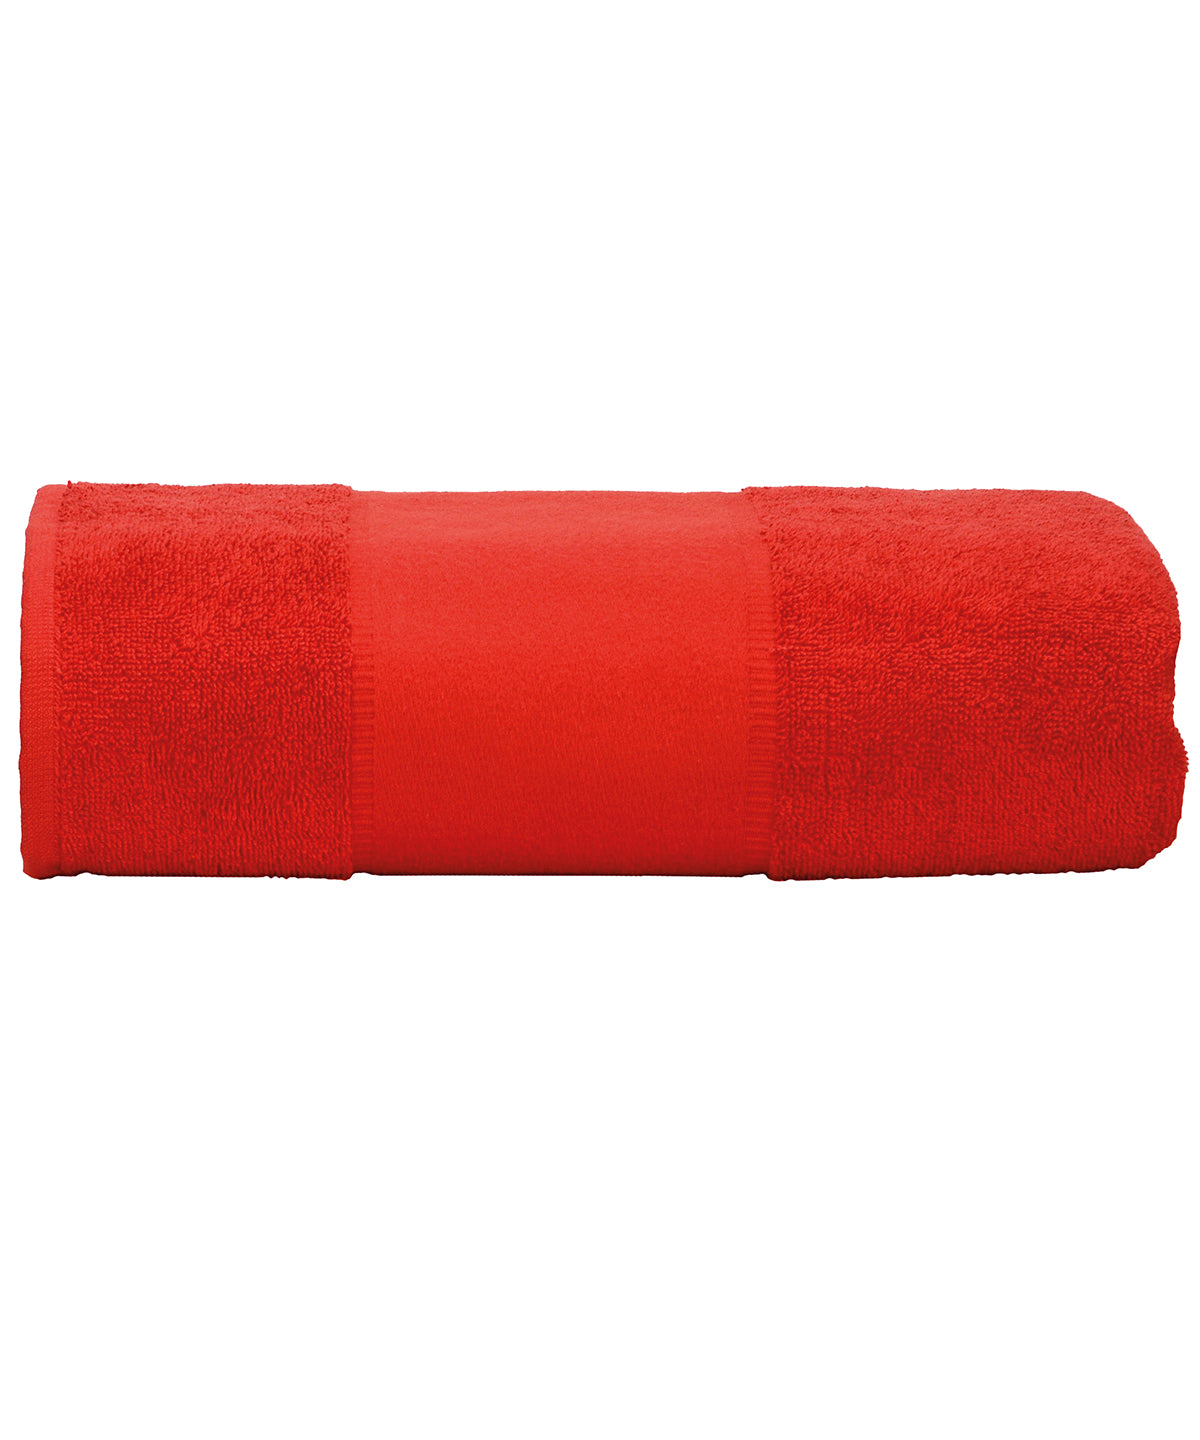 Personalised Towels - Mid Red A&R Towels ARTG® PRINT-Me® big towel